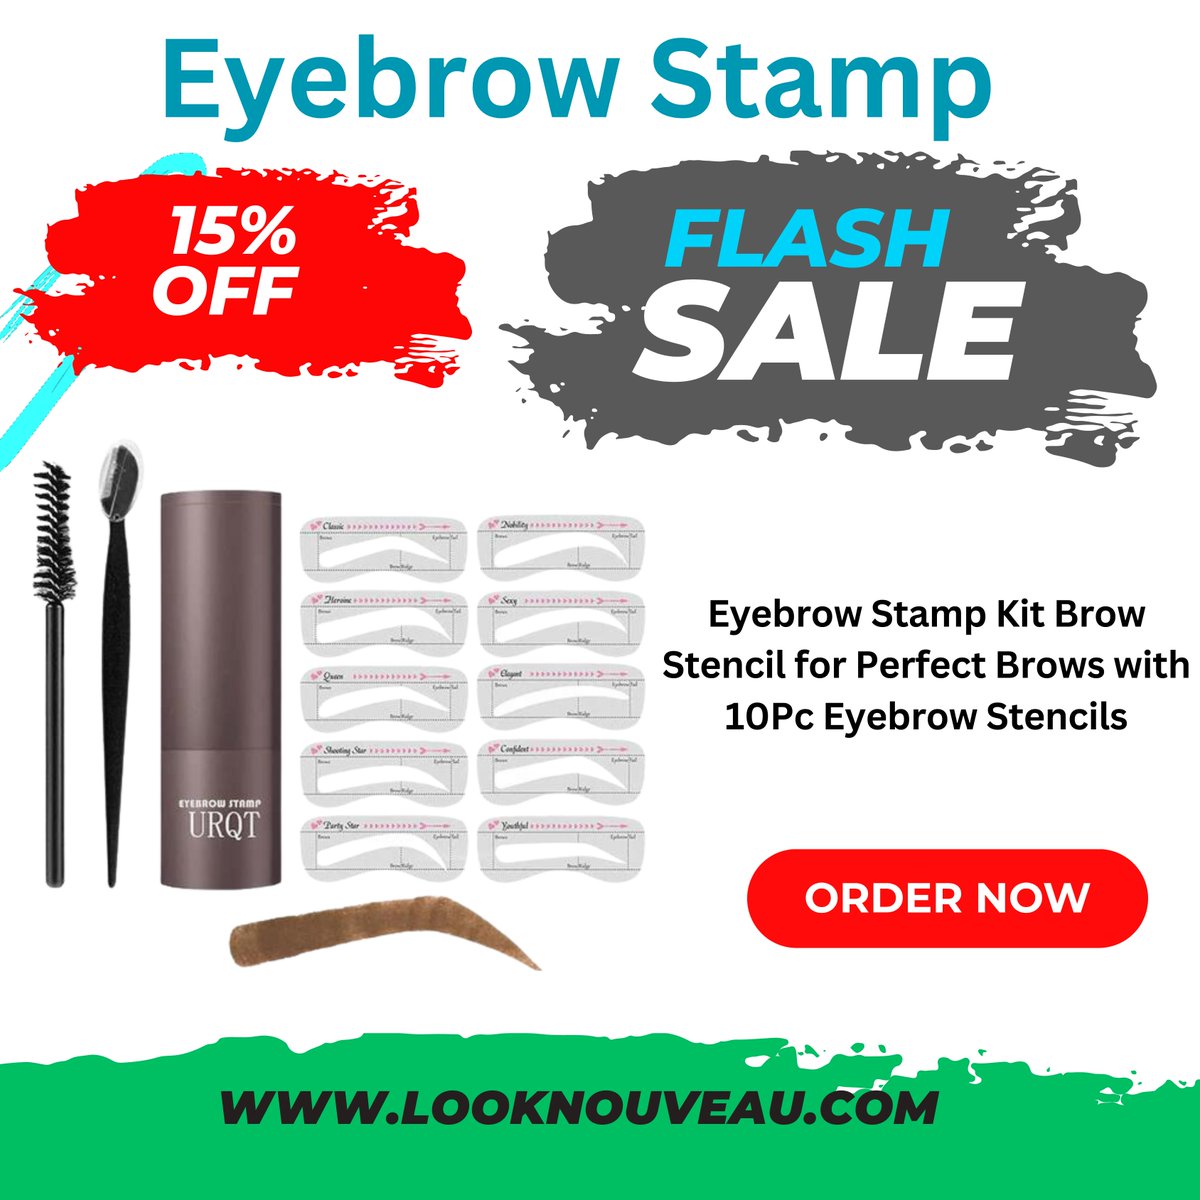 Eyebrow Stamp Stencil Kit And Brow Stamp Shaping Kit-Long Lasting Eyebrow Stamp Waterproof,Eyebrow Stamp Tool Kit #eyebrowviral #eyebrowstamp #eyebrowpowder #eyebrowstampkit #kosmetikpati #browtransformation #browtint #browlife #browsonfleek #browgame #eyebrowtinting